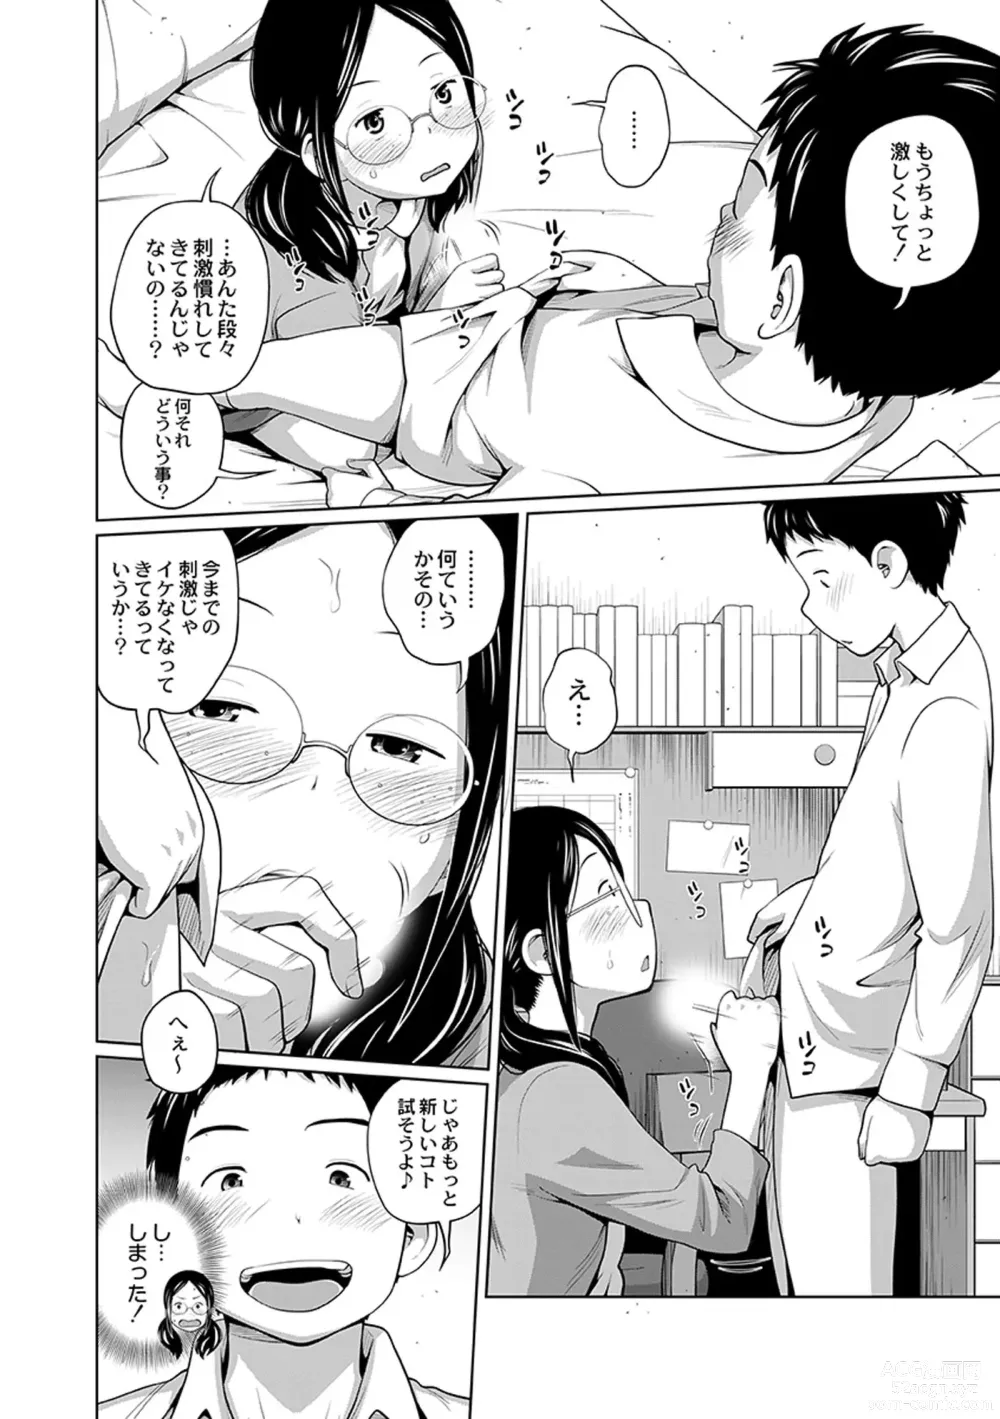 Page 8 of manga Ane Megane - spectacled sister